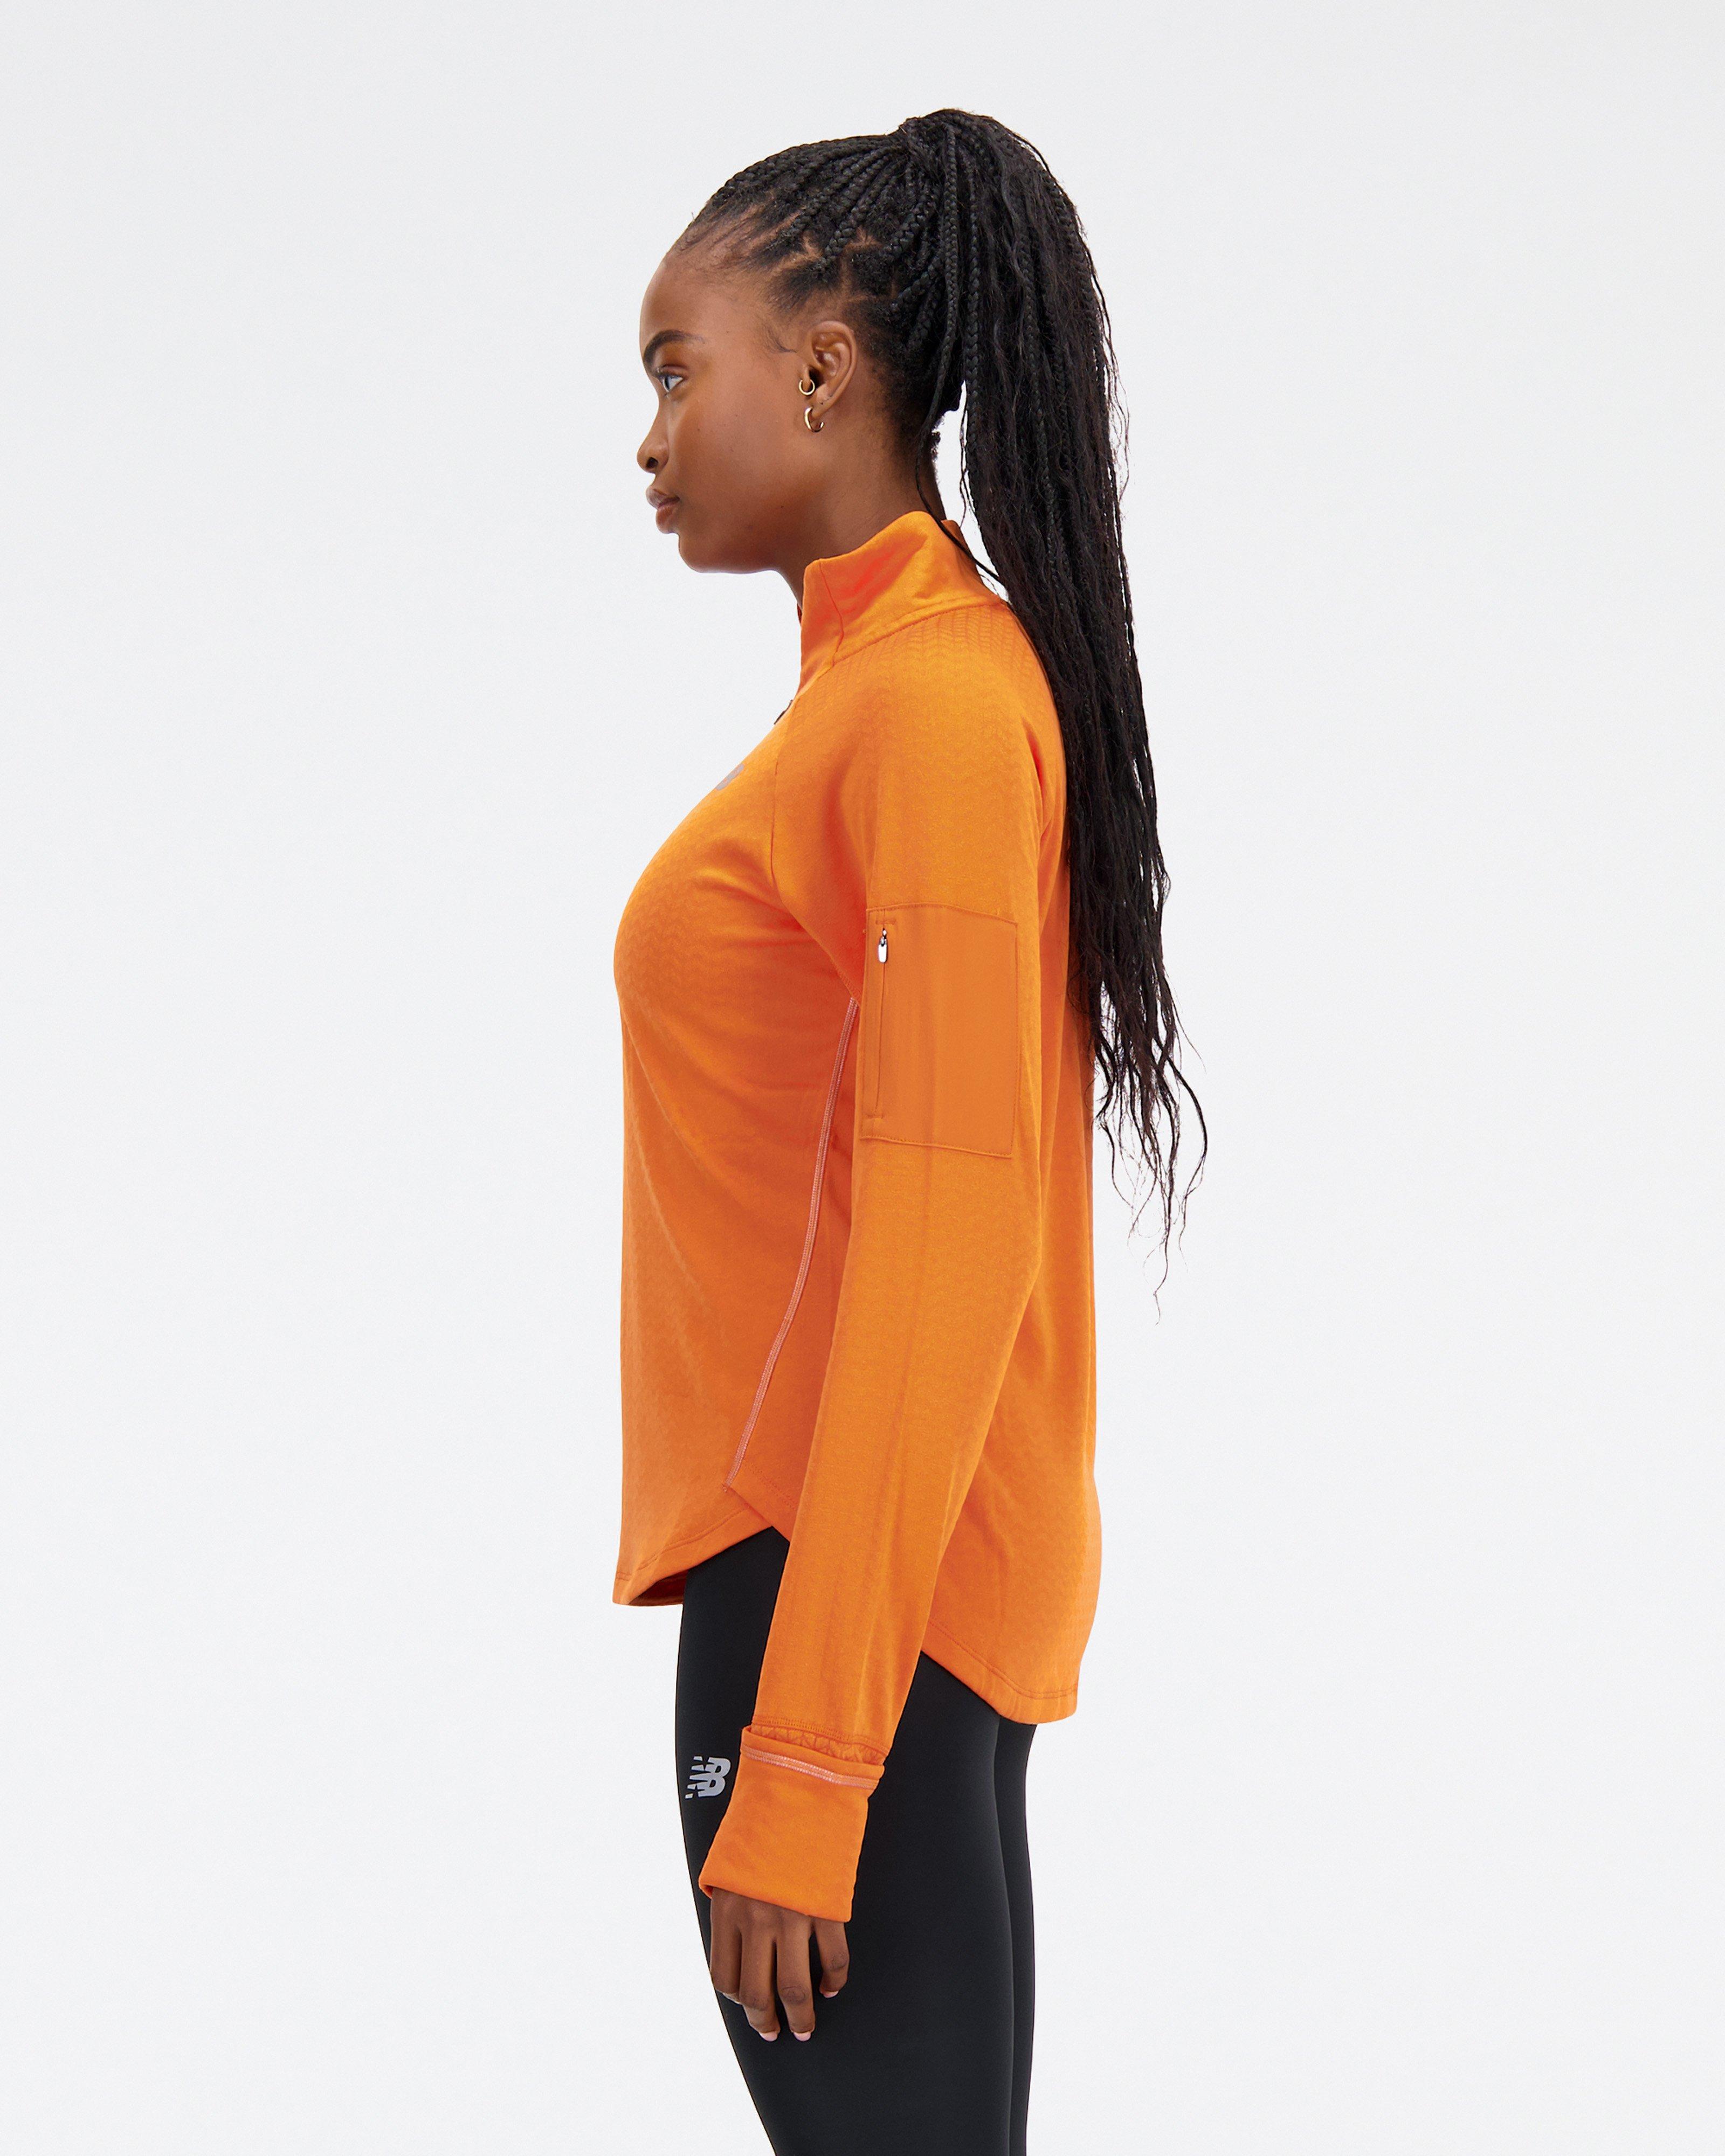 New Balance Women’s Impact Run ¼ Zip Top -  Orange